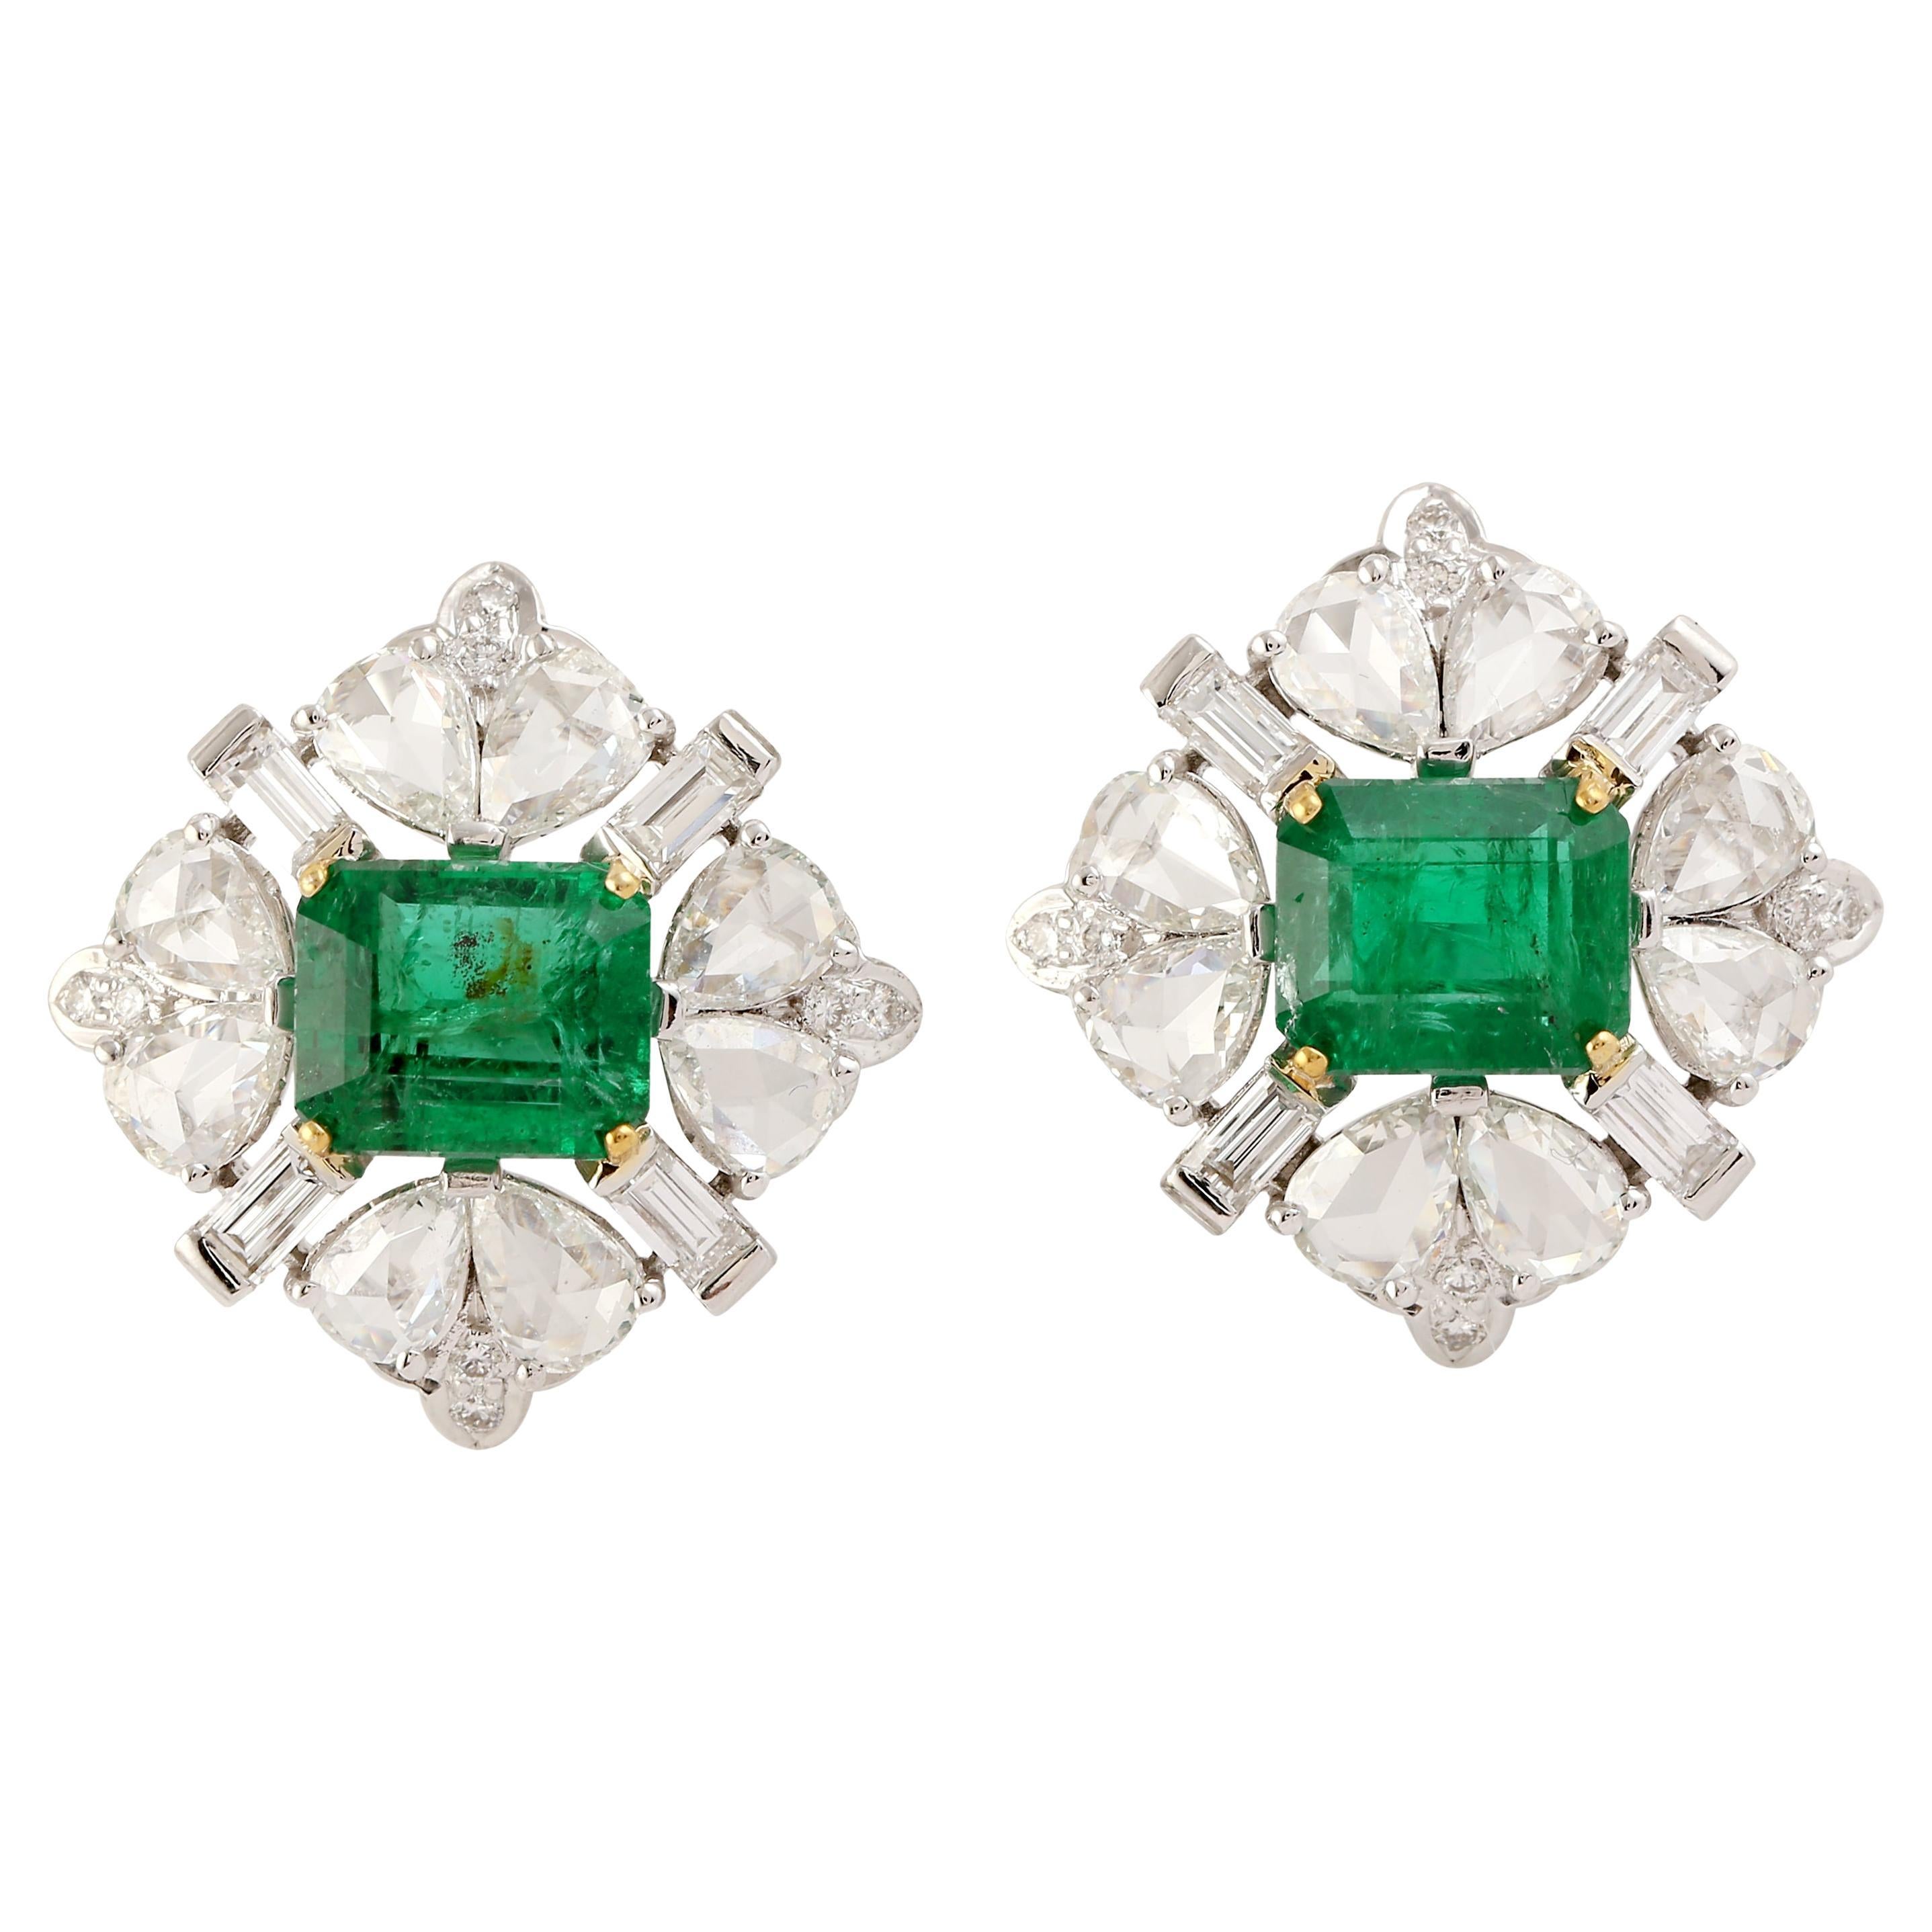 Designer Rosecut Diamond and Emerald Stud Made in 18K White Gold